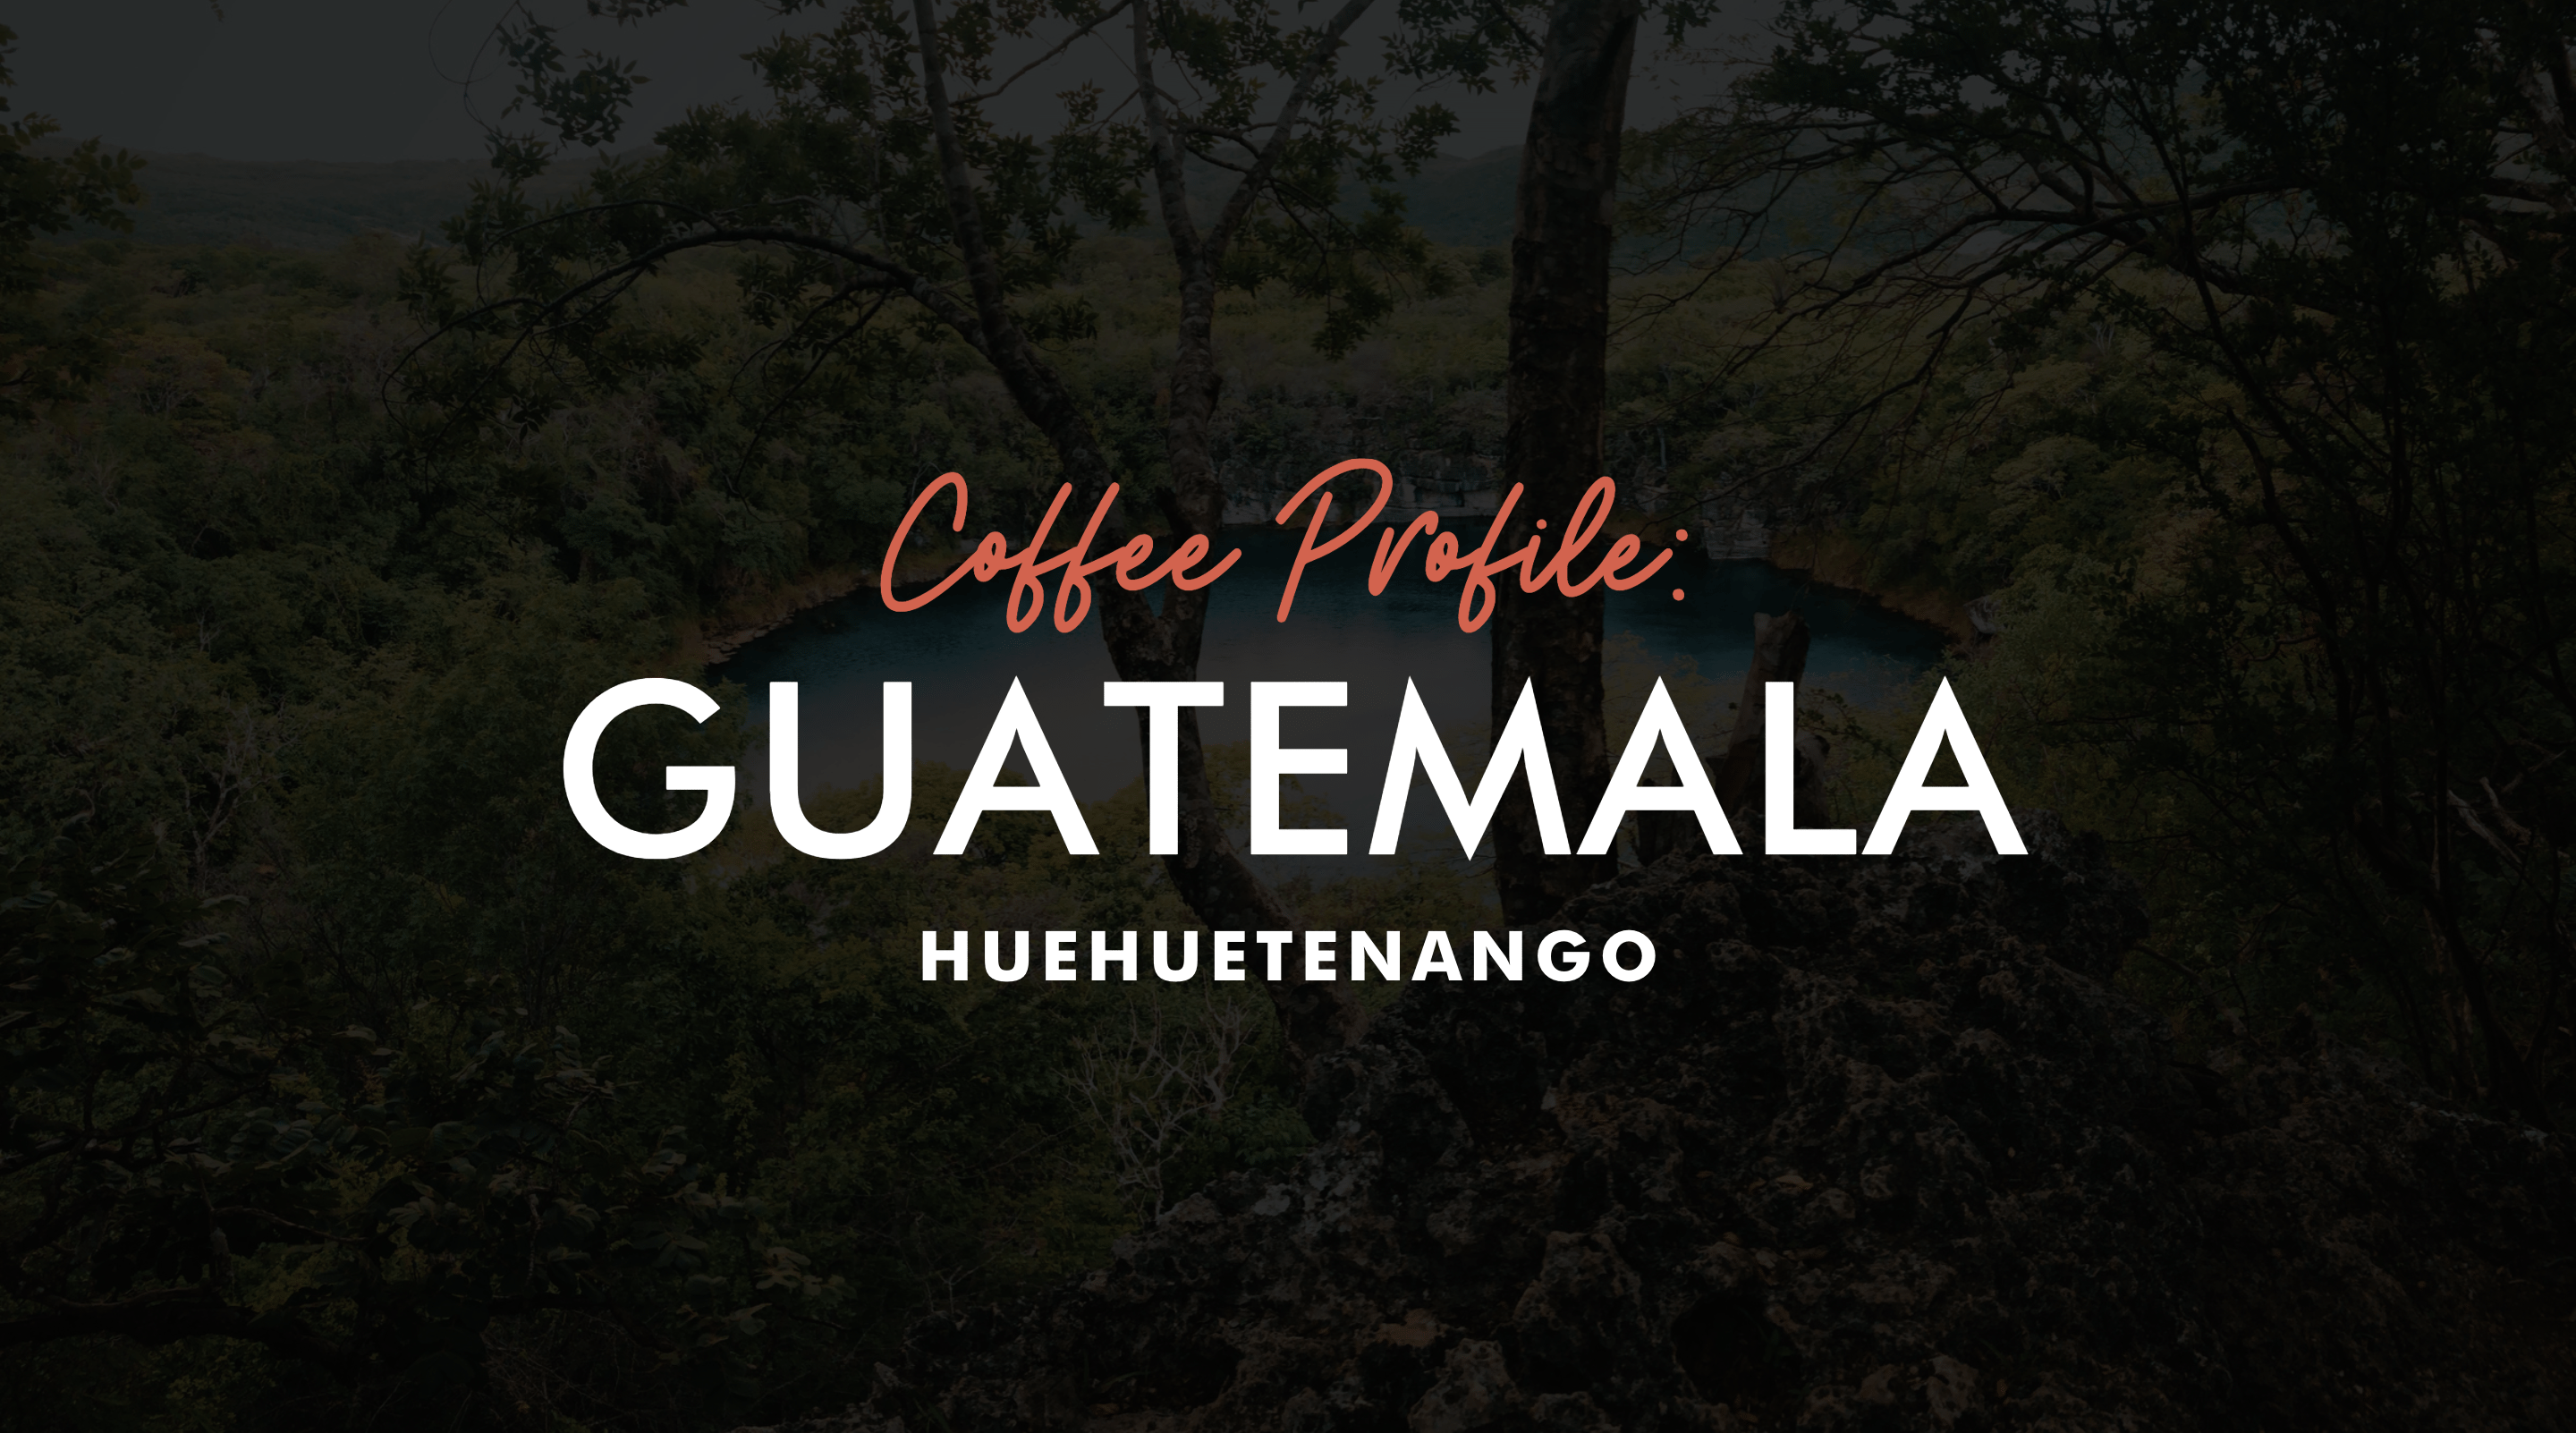 Guatemala coffee profile: Huehuetenango coffee region